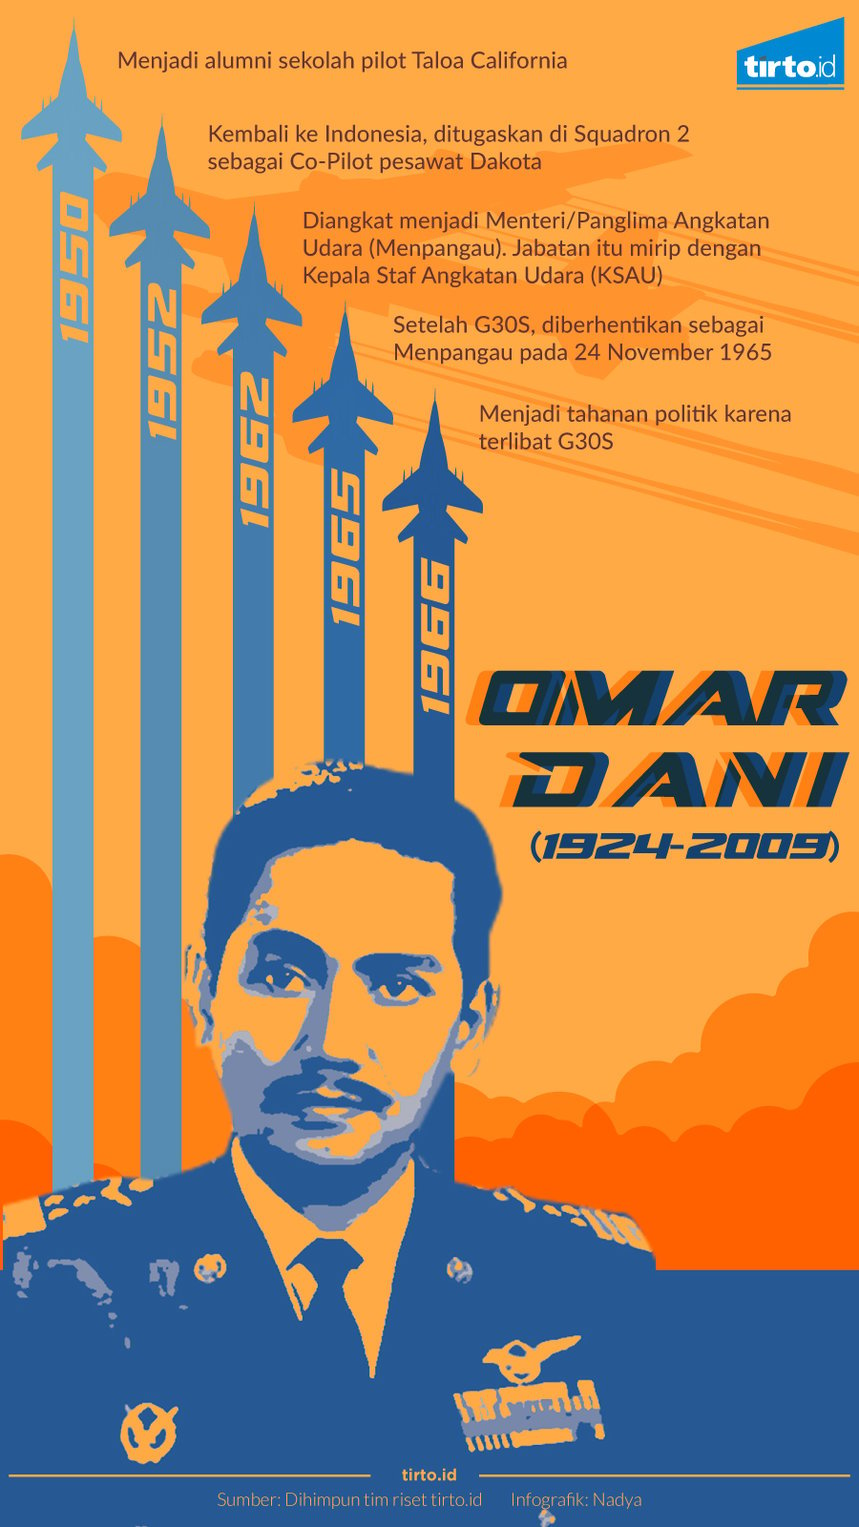 Infografik Omar dani